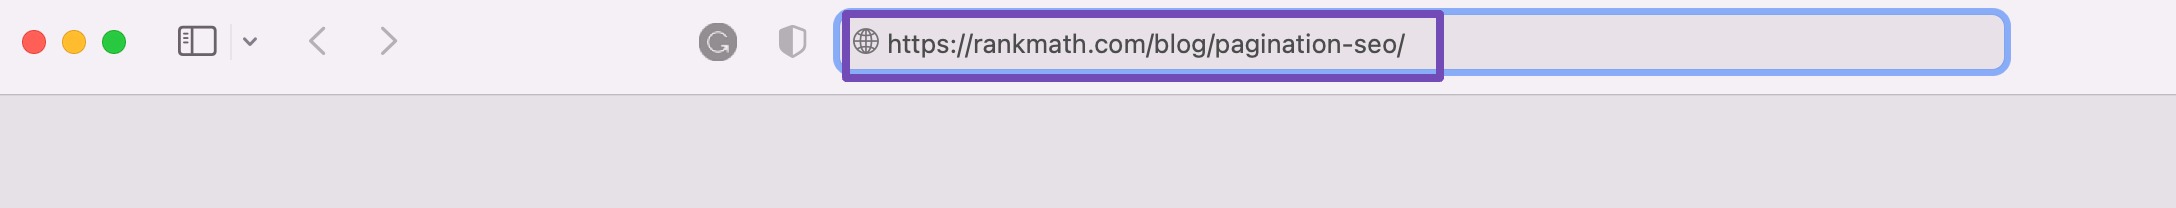 SEO-friendly URL example